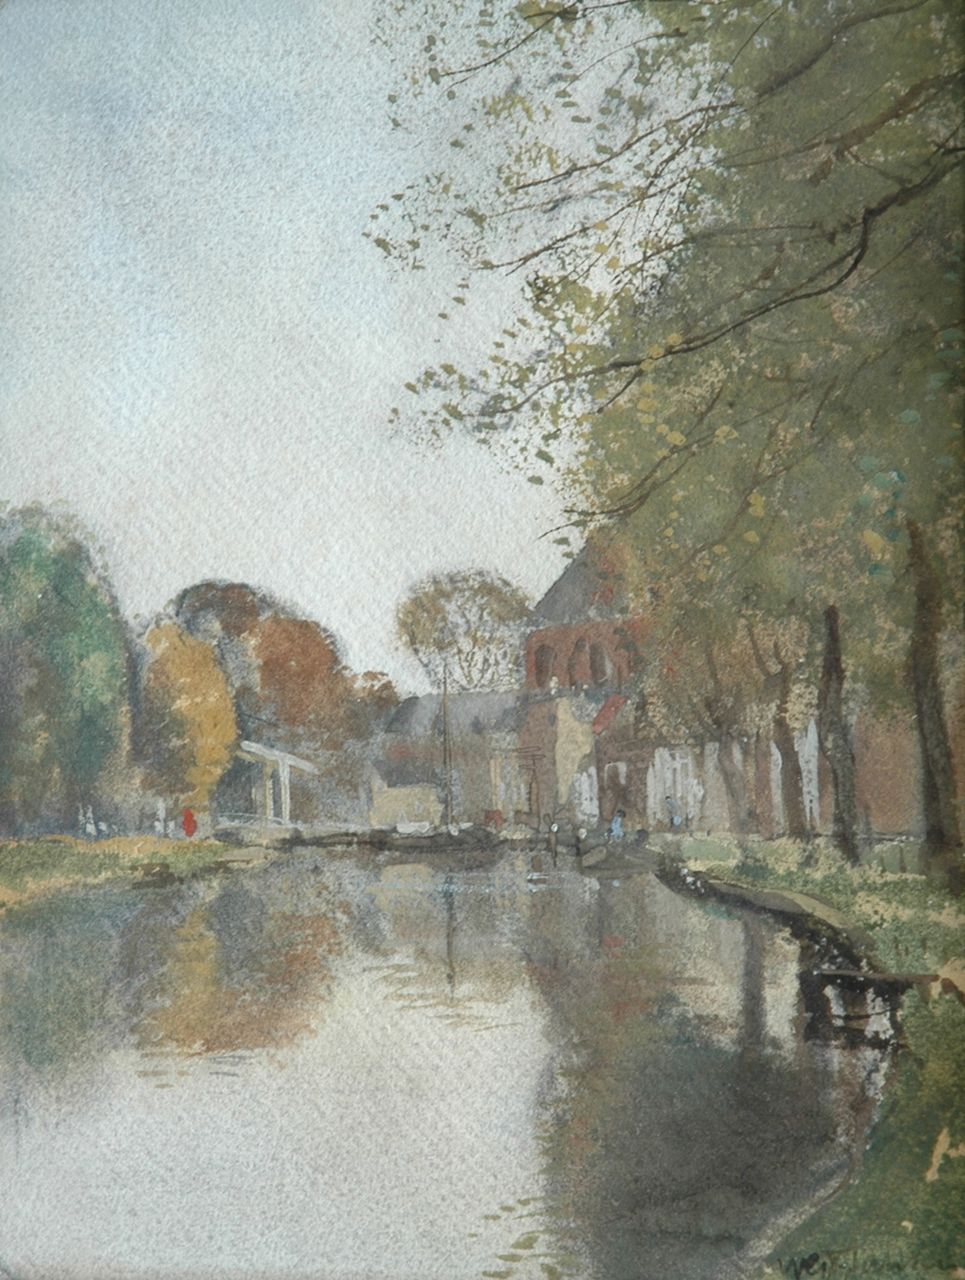 Jansen W.G.F.  | 'Willem' George Frederik Jansen, A canal with a drawbridge, watercolour on paper 29.1 x 22.8 cm, signed l.r.